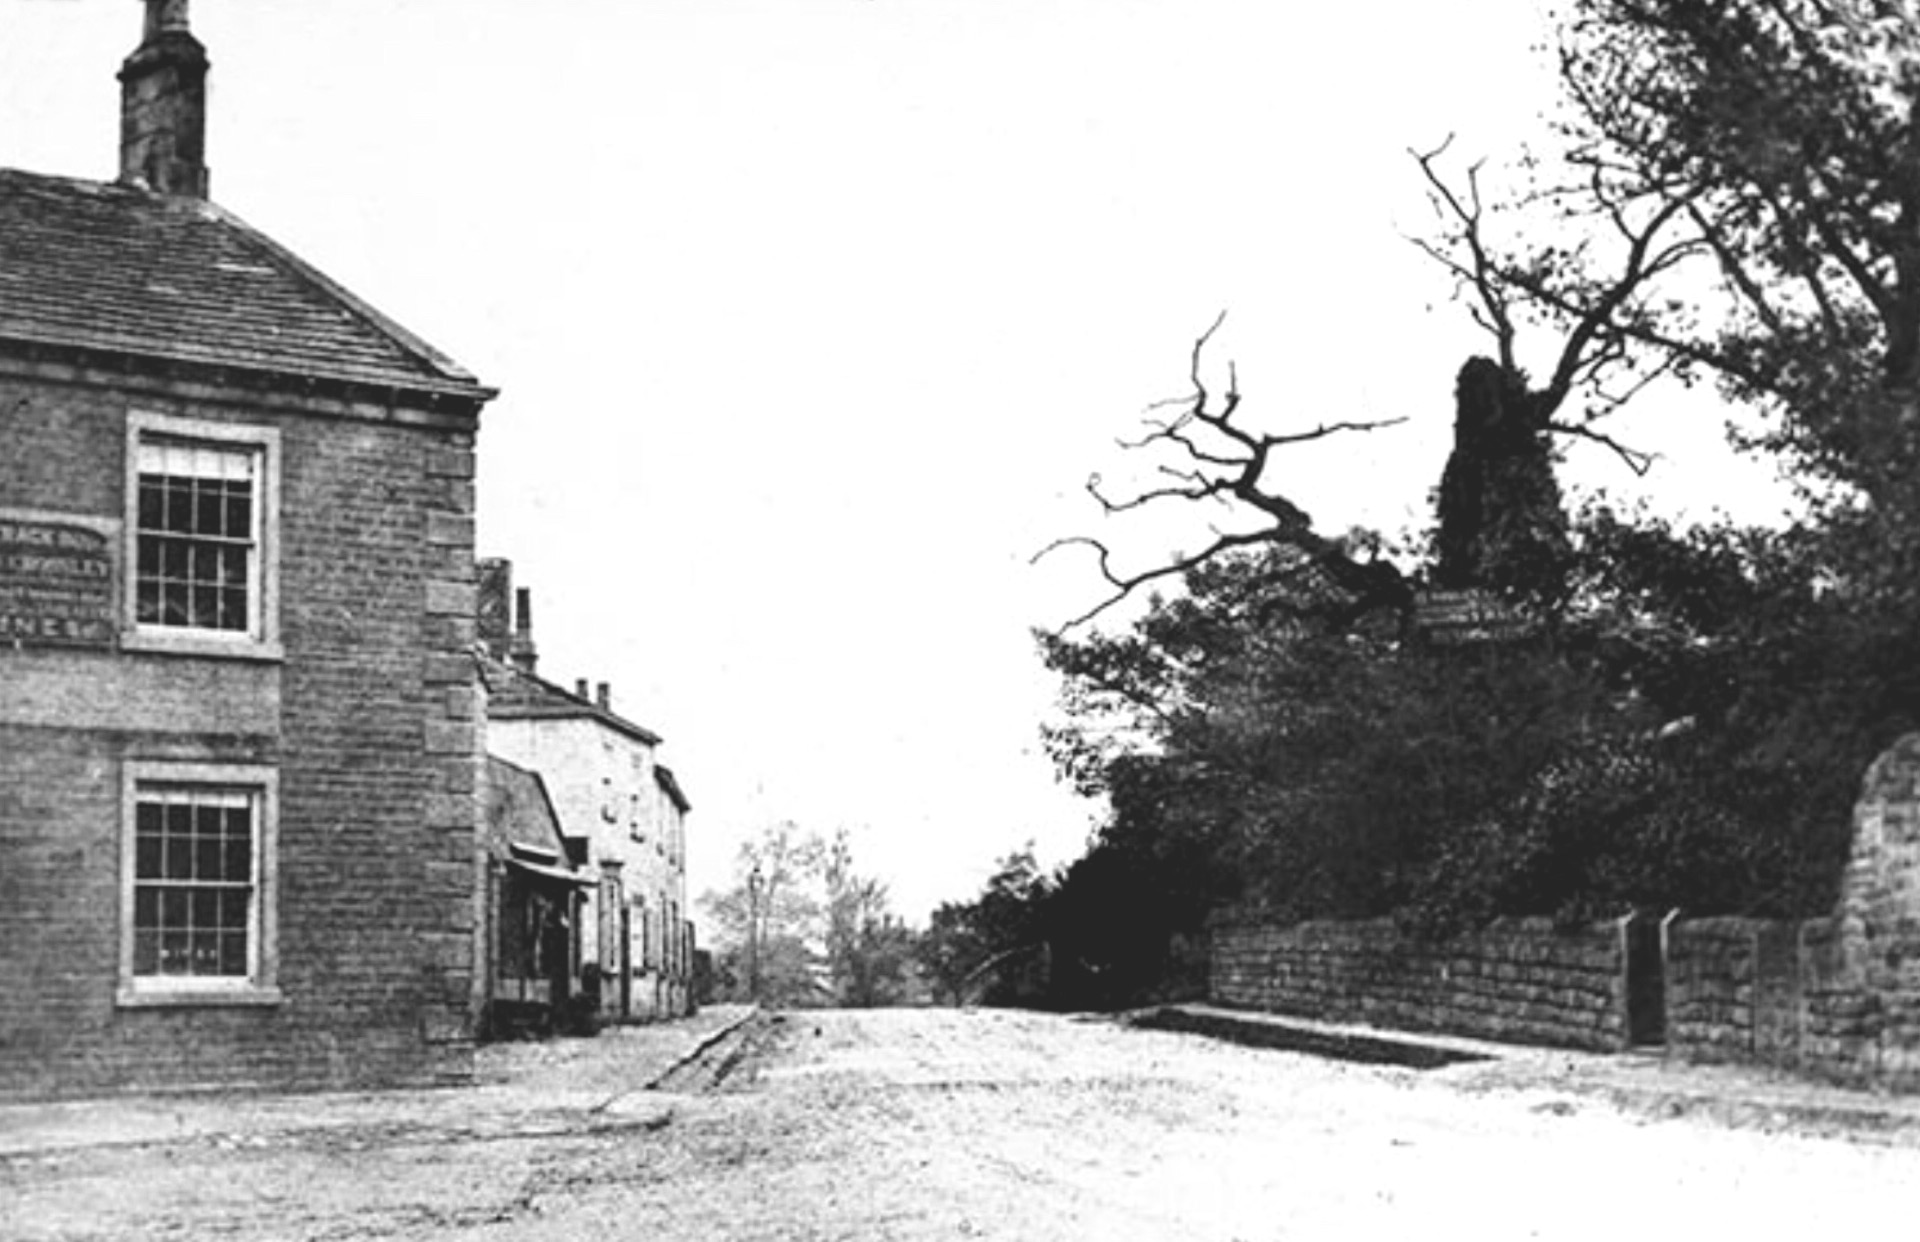  Skyrack and Shire Oak, circa 1852